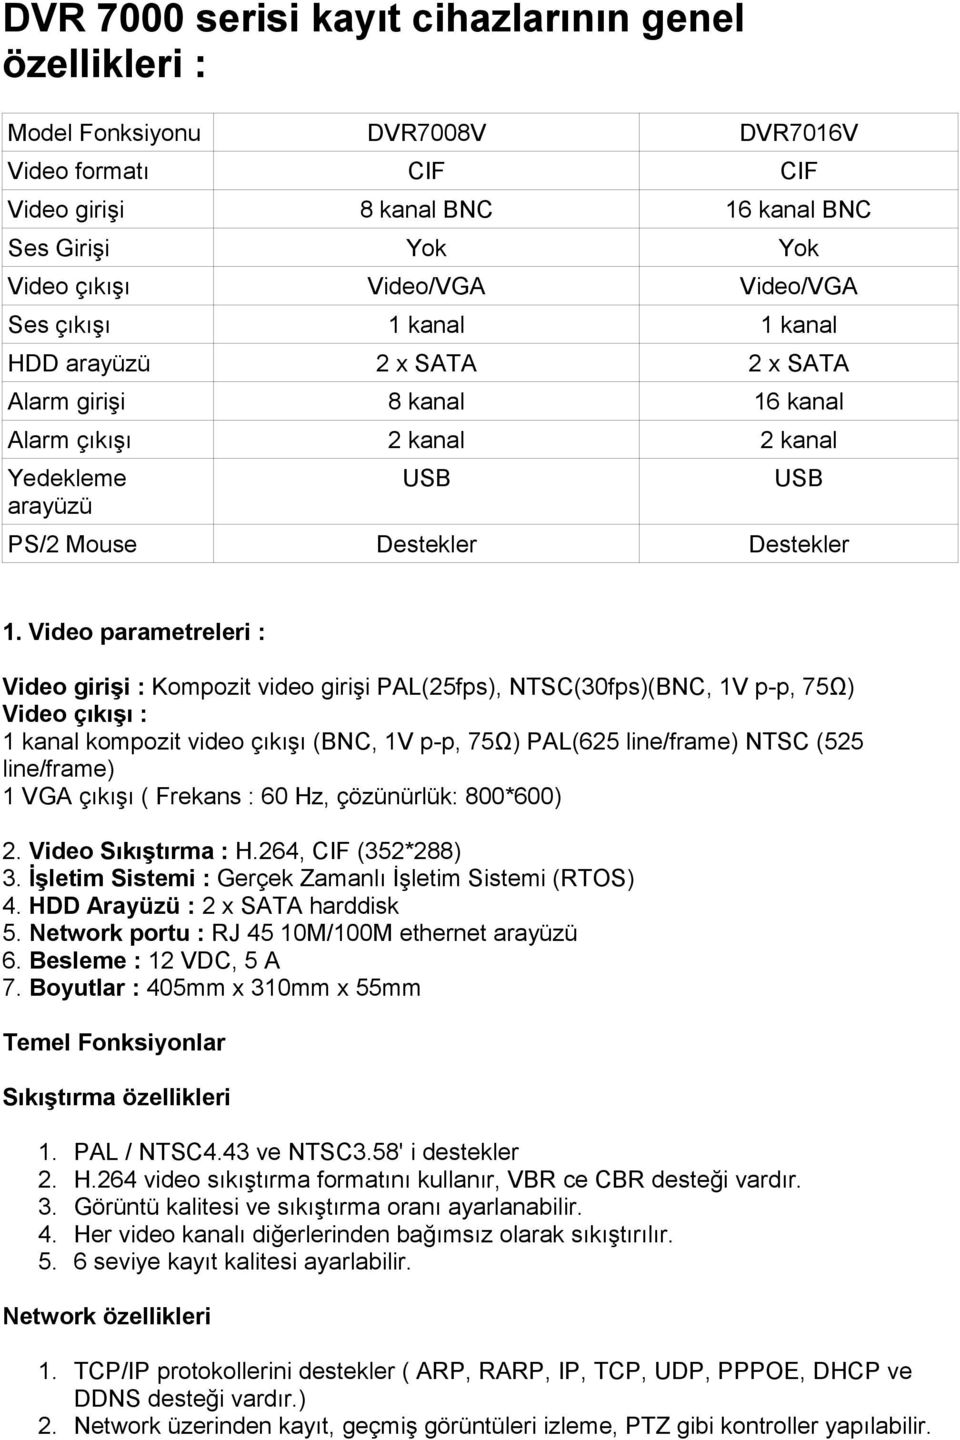 Video parametreleri : Video girişi : Kompozit video girişi PAL(25fps), NTSC(30fps)(BNC, 1V p-p, 75Ω) Video çıkışı : 1 kanal kompozit video çıkışı (BNC, 1V p-p, 75Ω) PAL(625 line/frame) NTSC (525